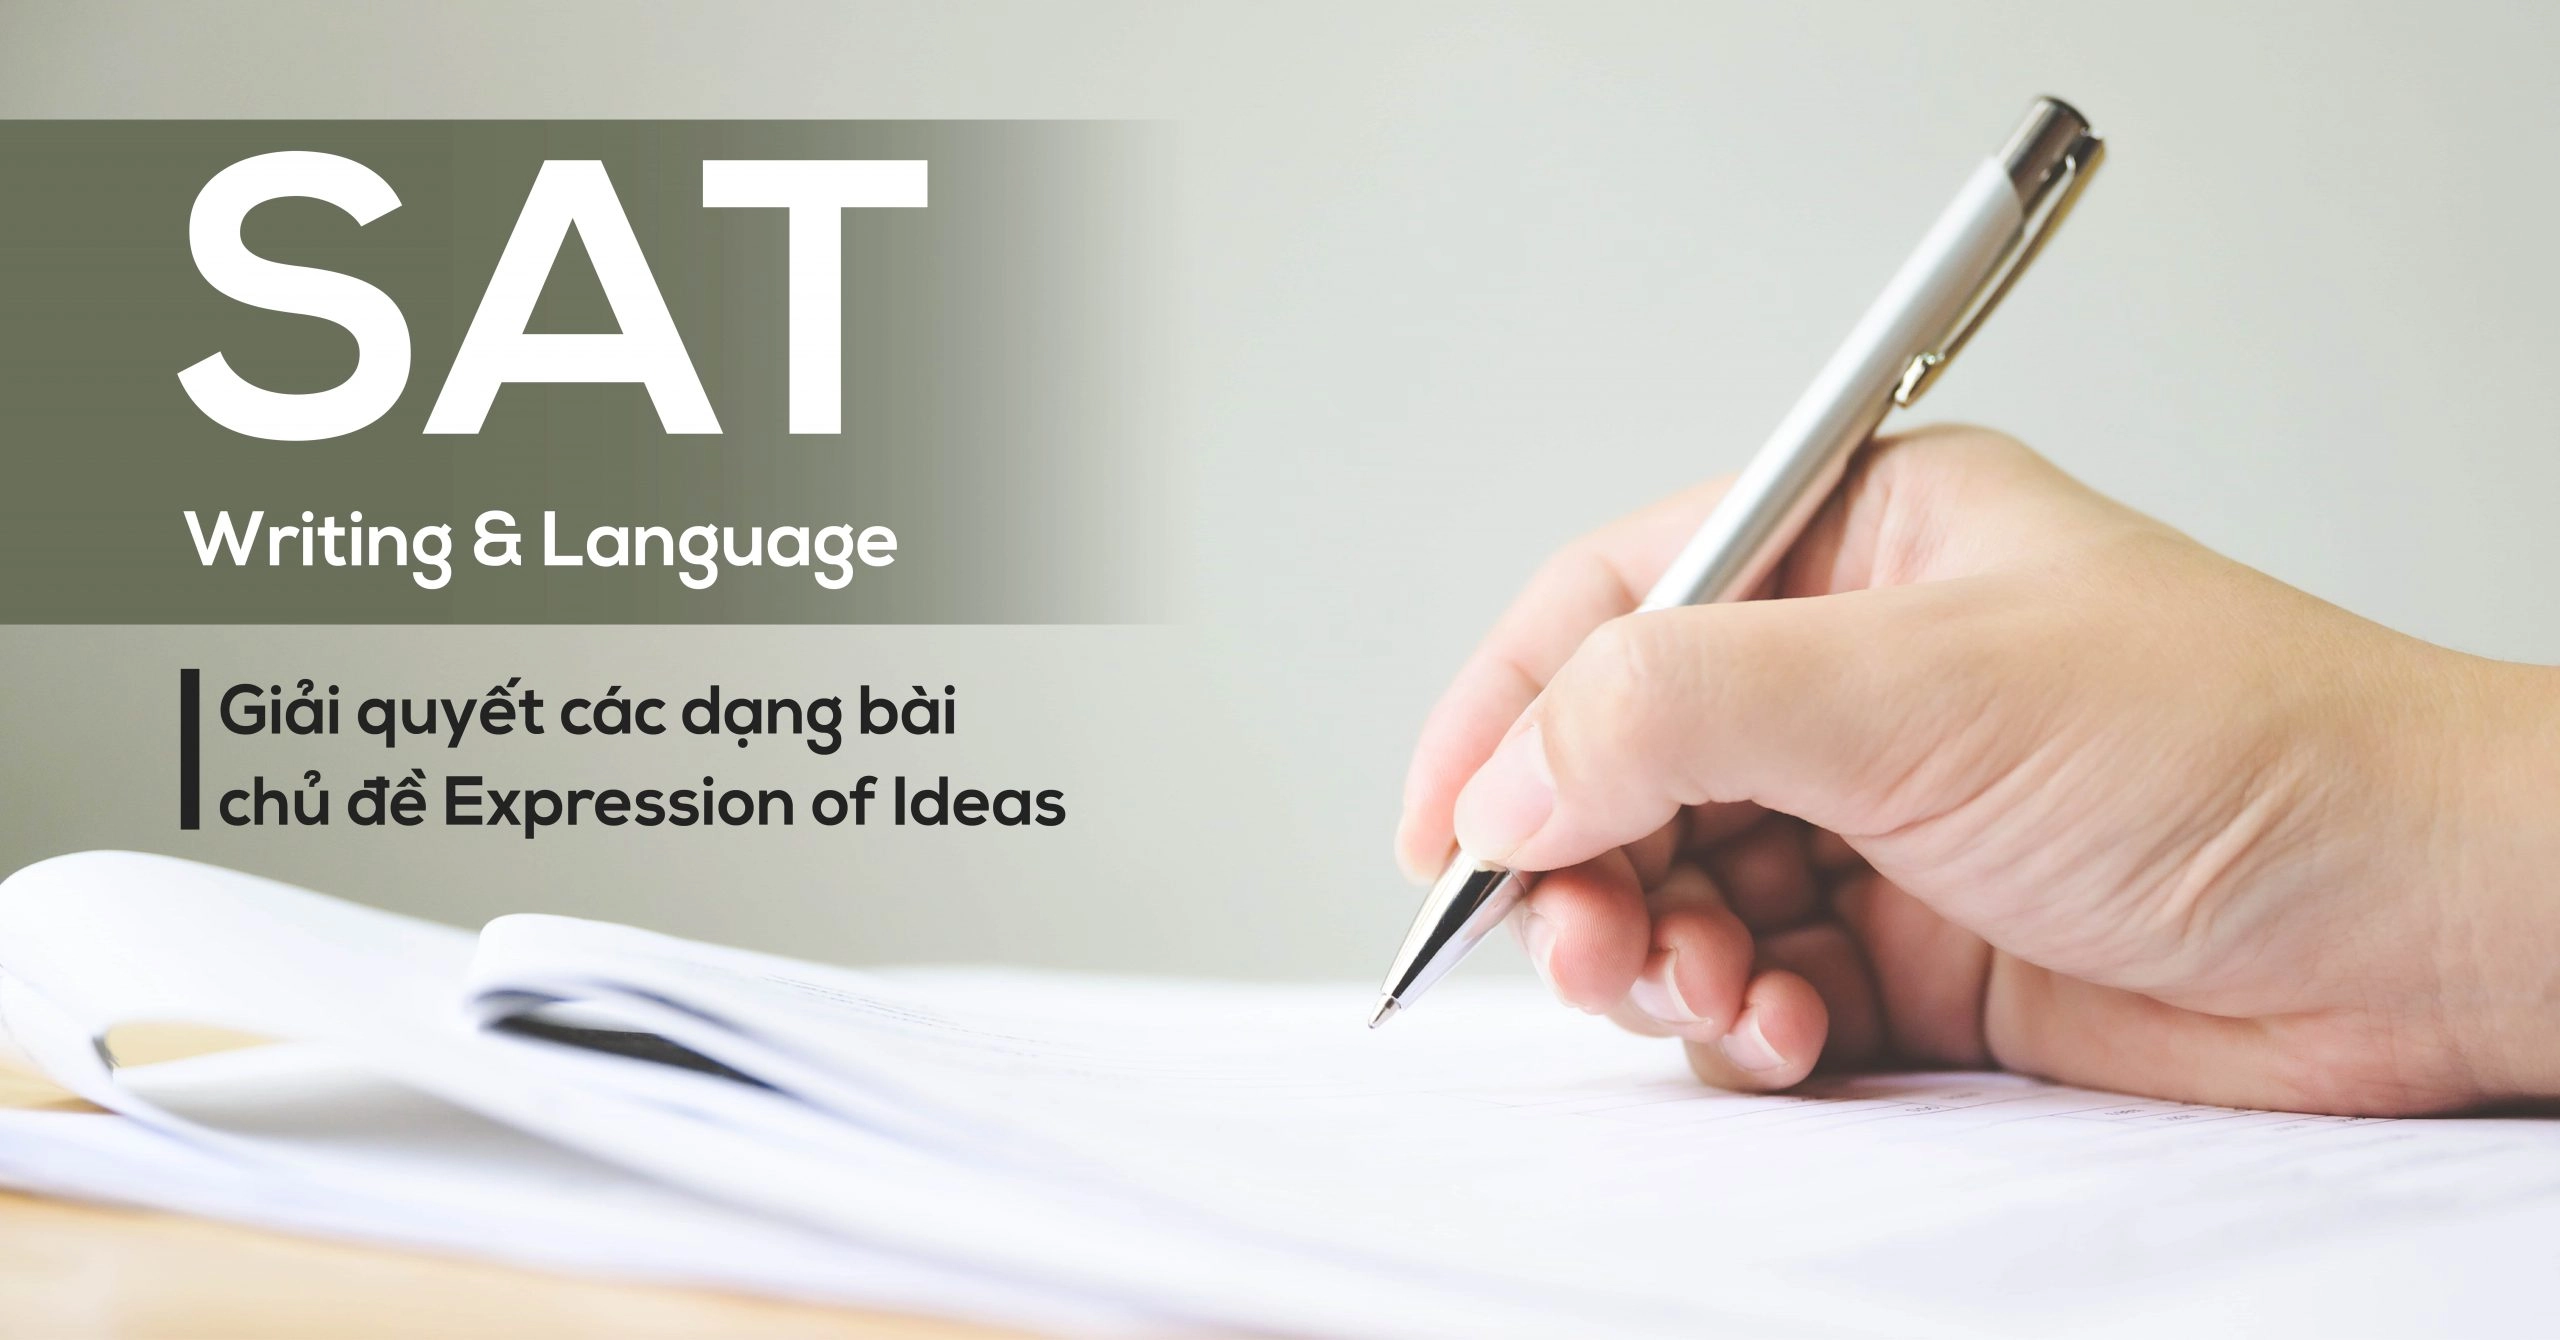 cach-lam-cac-dang-bai-cua-chu-de-expression-of-ideas-trong-sat-writing-language